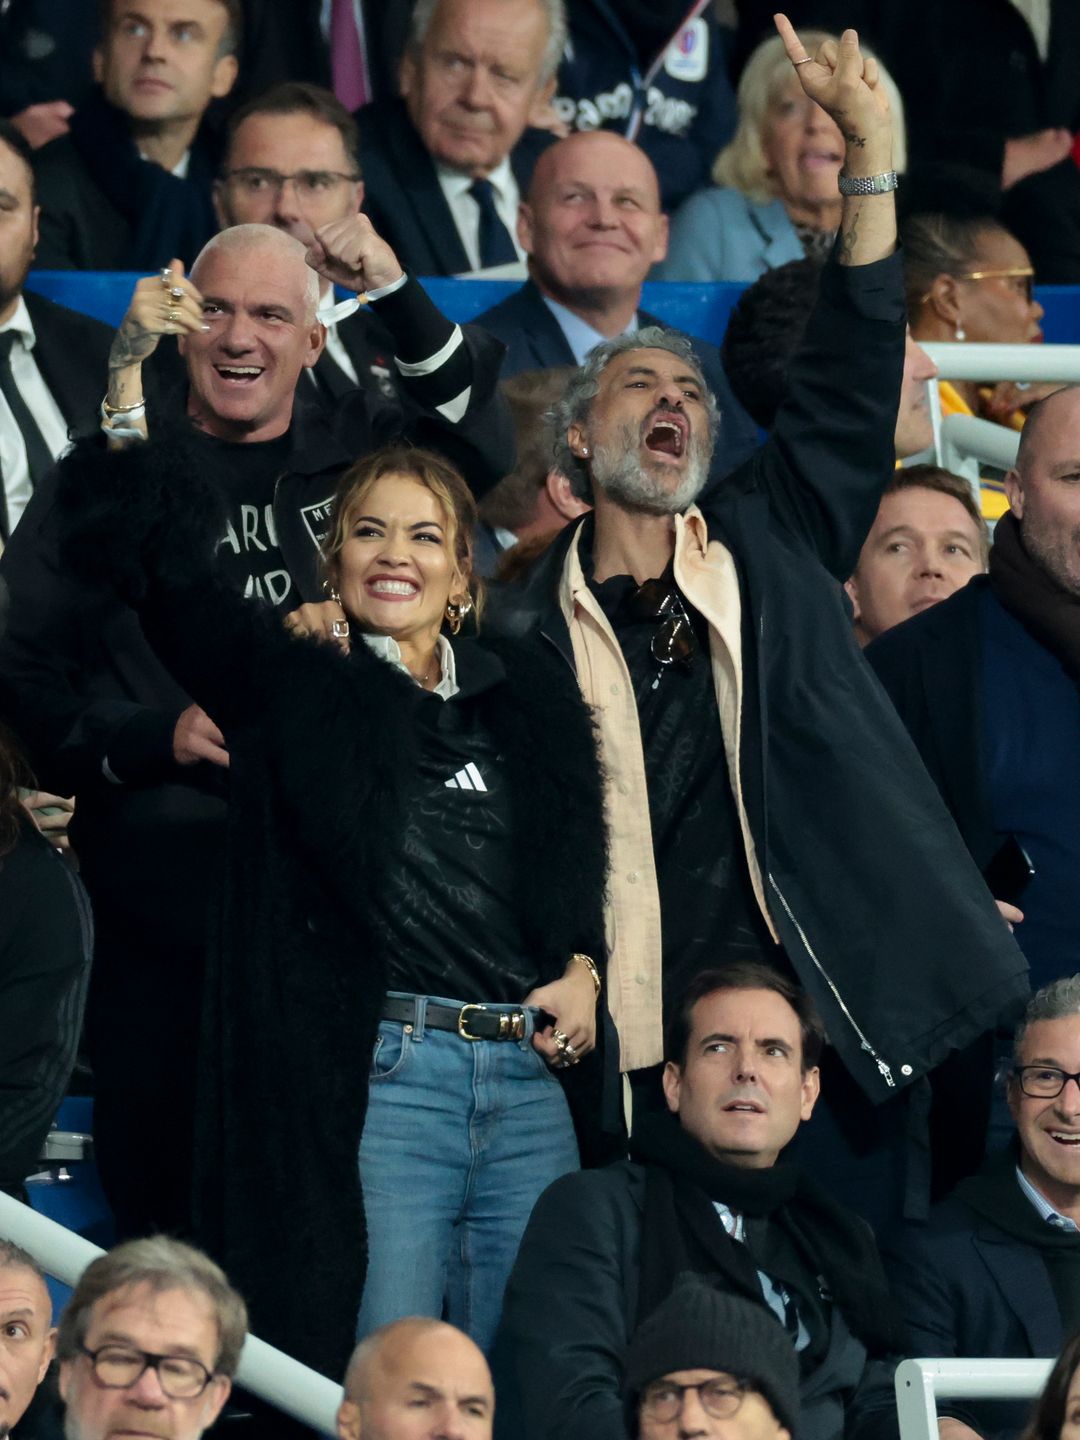 Rita Ora and Taika Waititi cheering in the crowd 